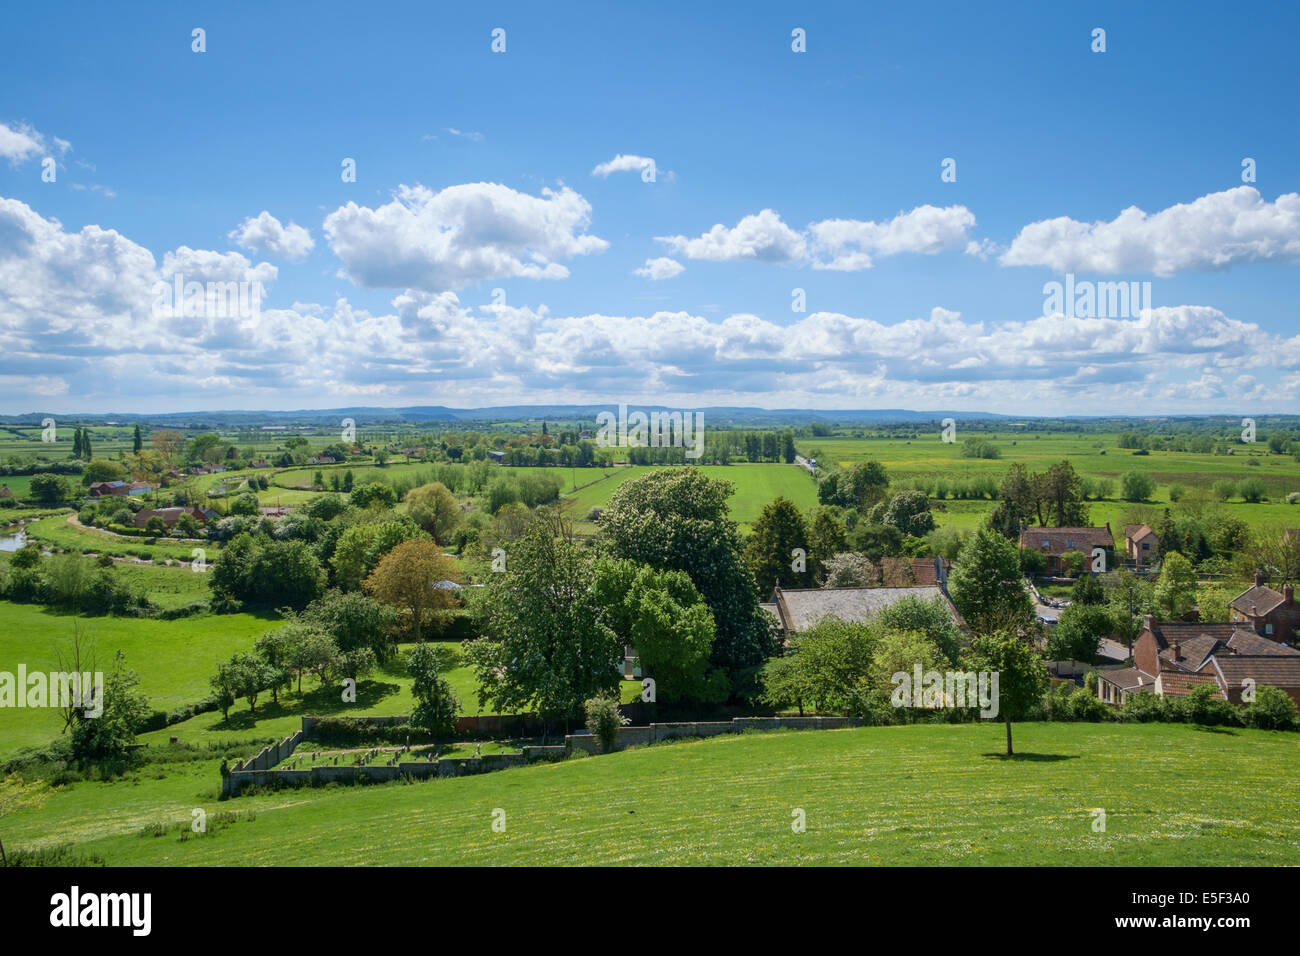 La campagne, paysage Somerset Somerset, England, UK - au village de Burrowbridge Banque D'Images